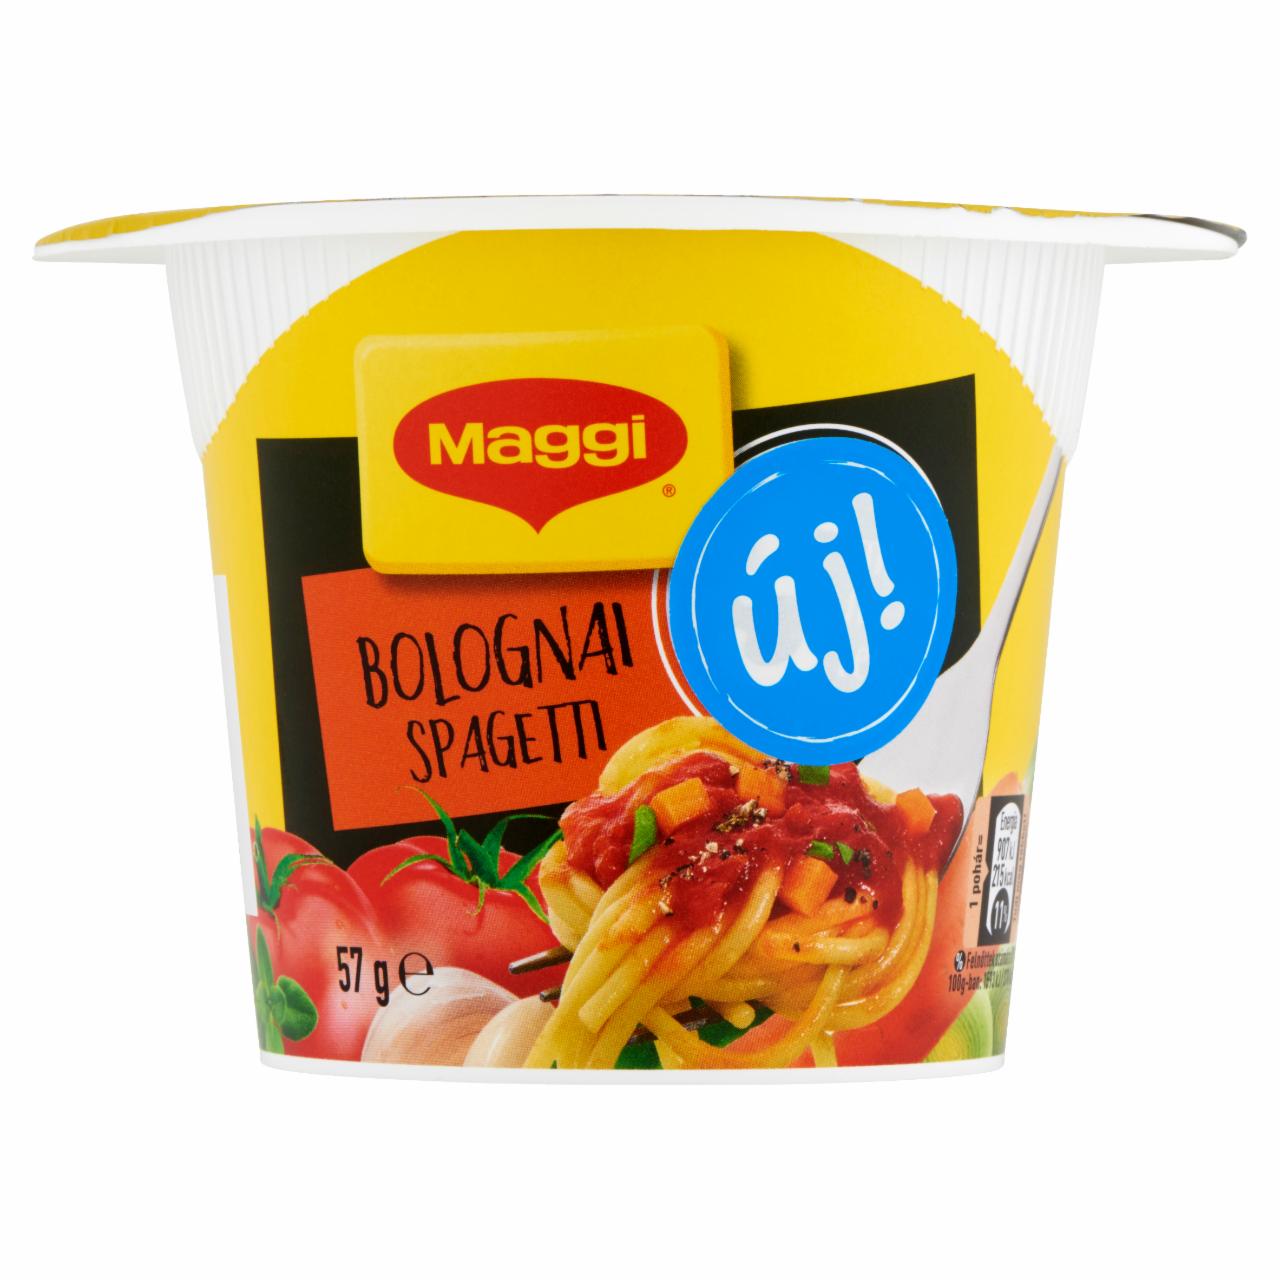 Képek - Maggi Bolognai spagetti 57 g